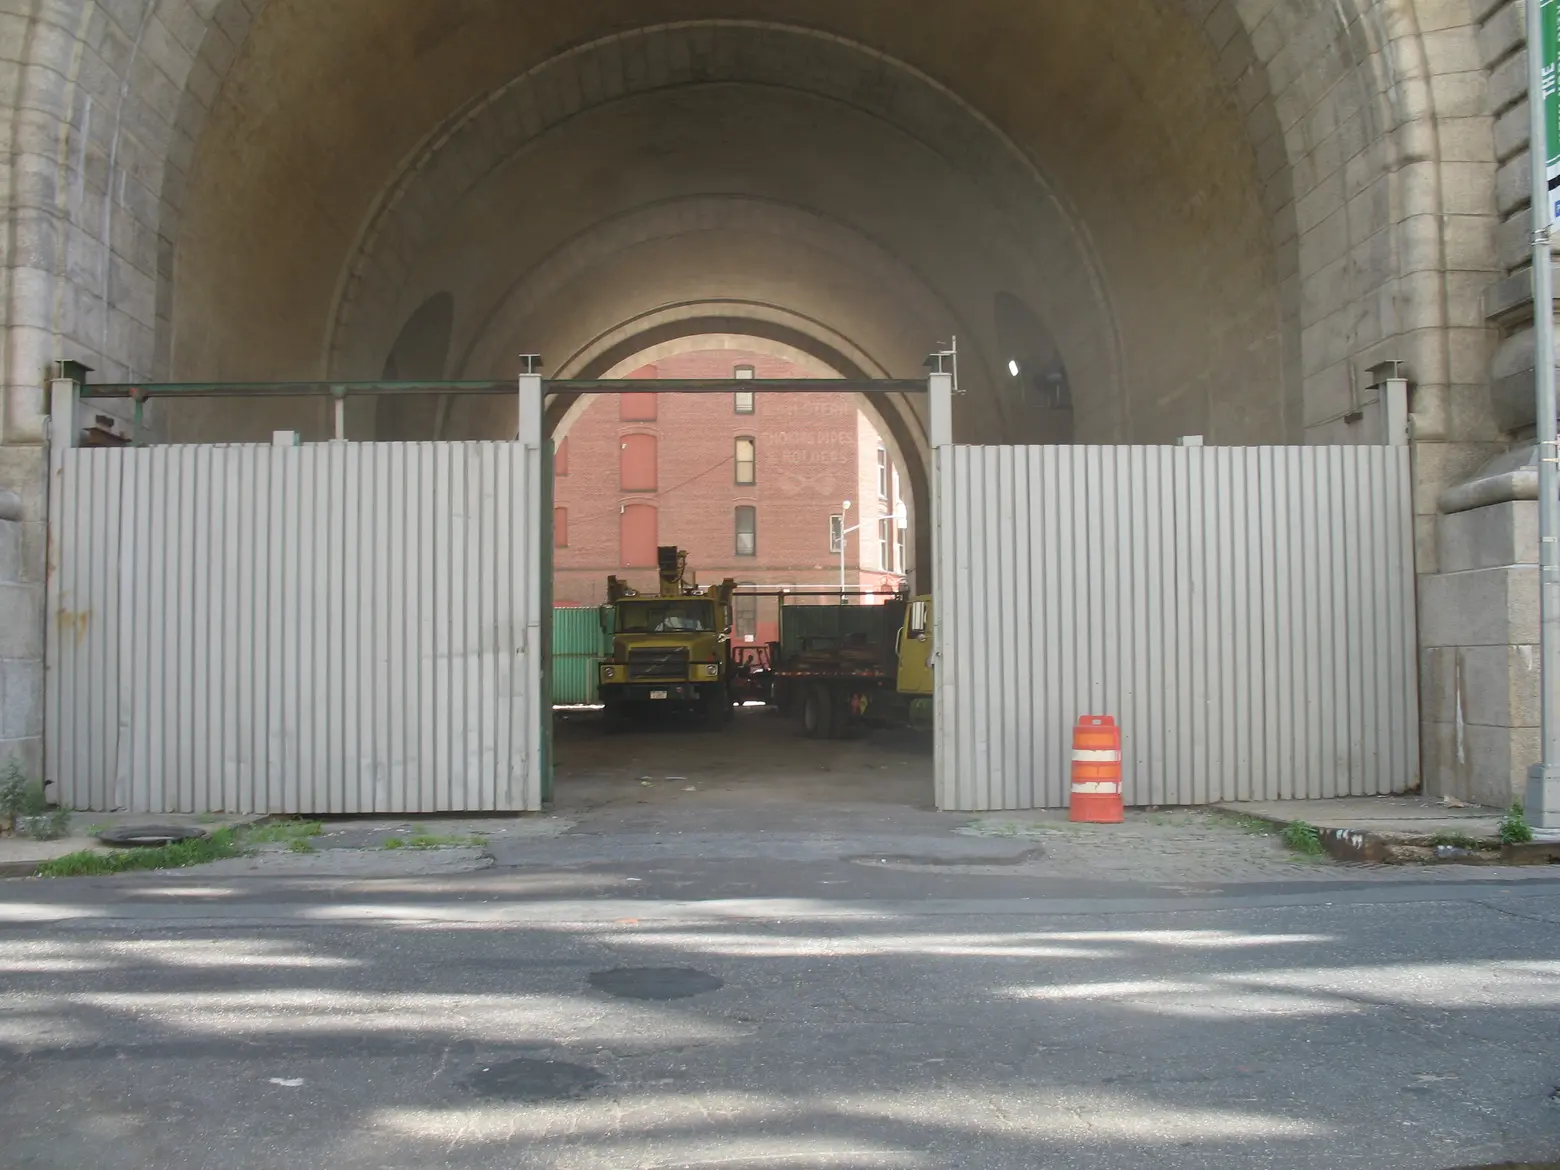 Dumbo archway, dumbo, public spaces